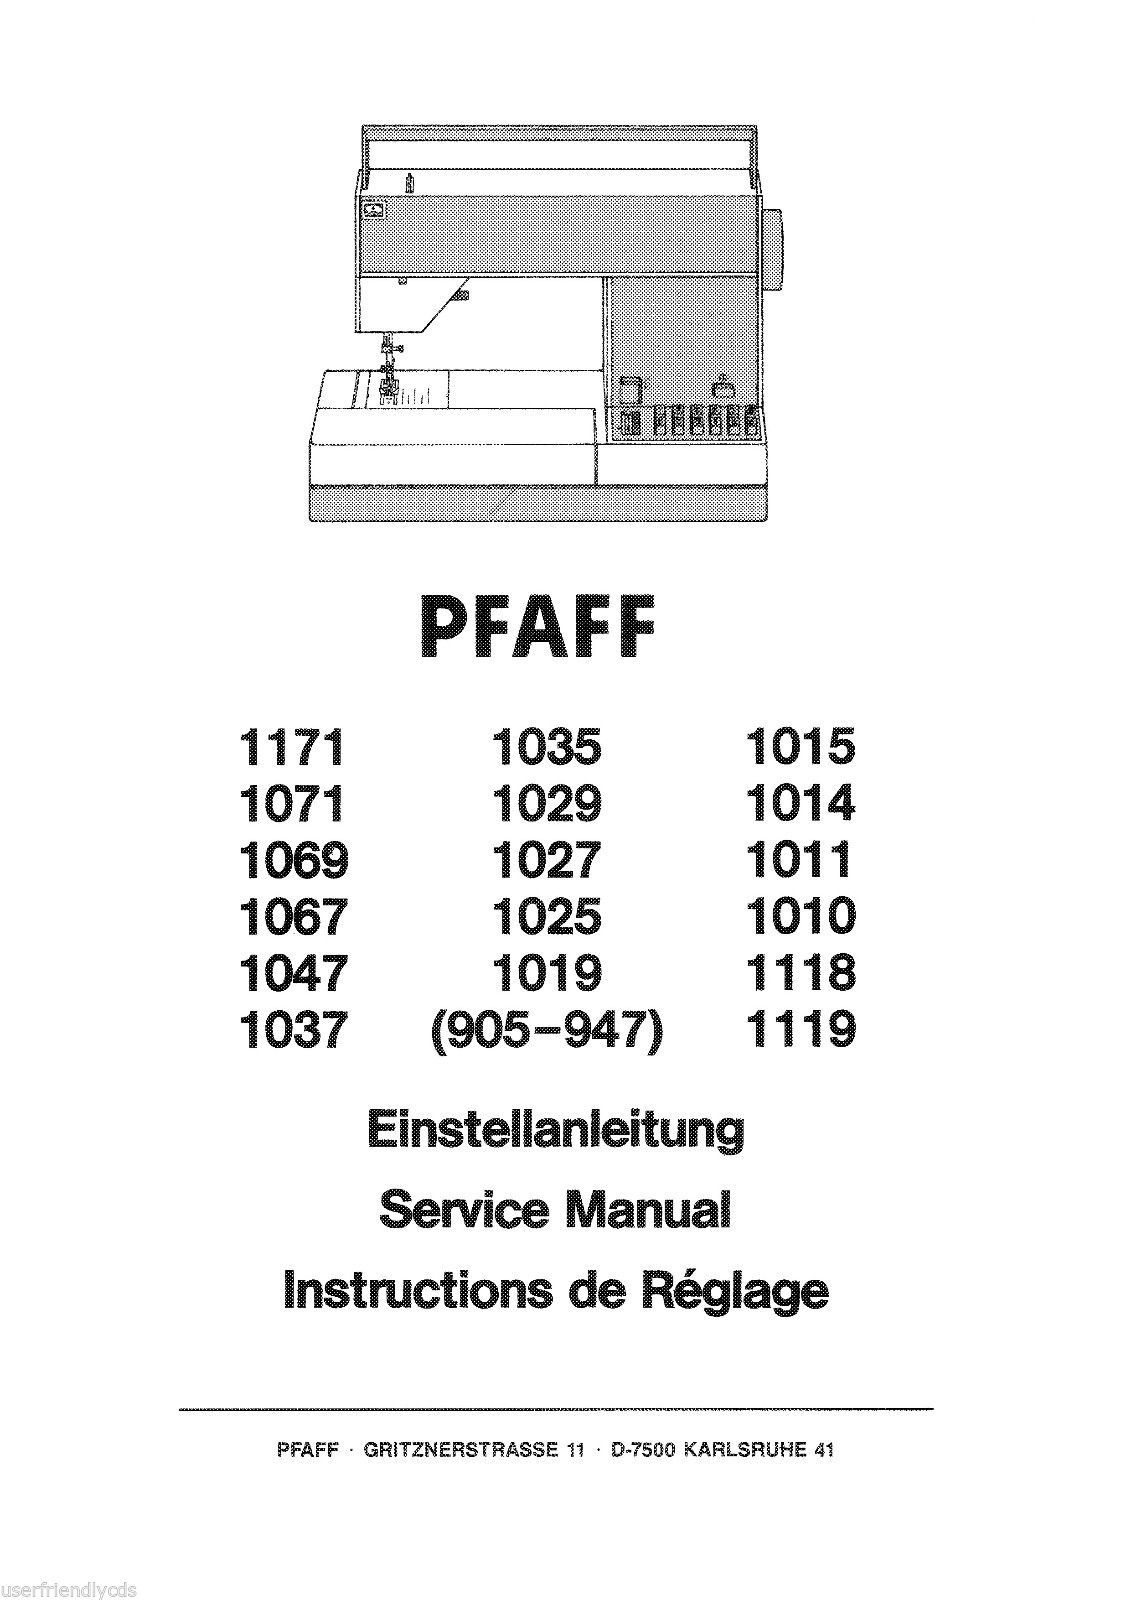 Primary image for Pfaff 1067, 1069, 1118, 1119, 1171 Service Repair Maintenance Workshop Manual CD